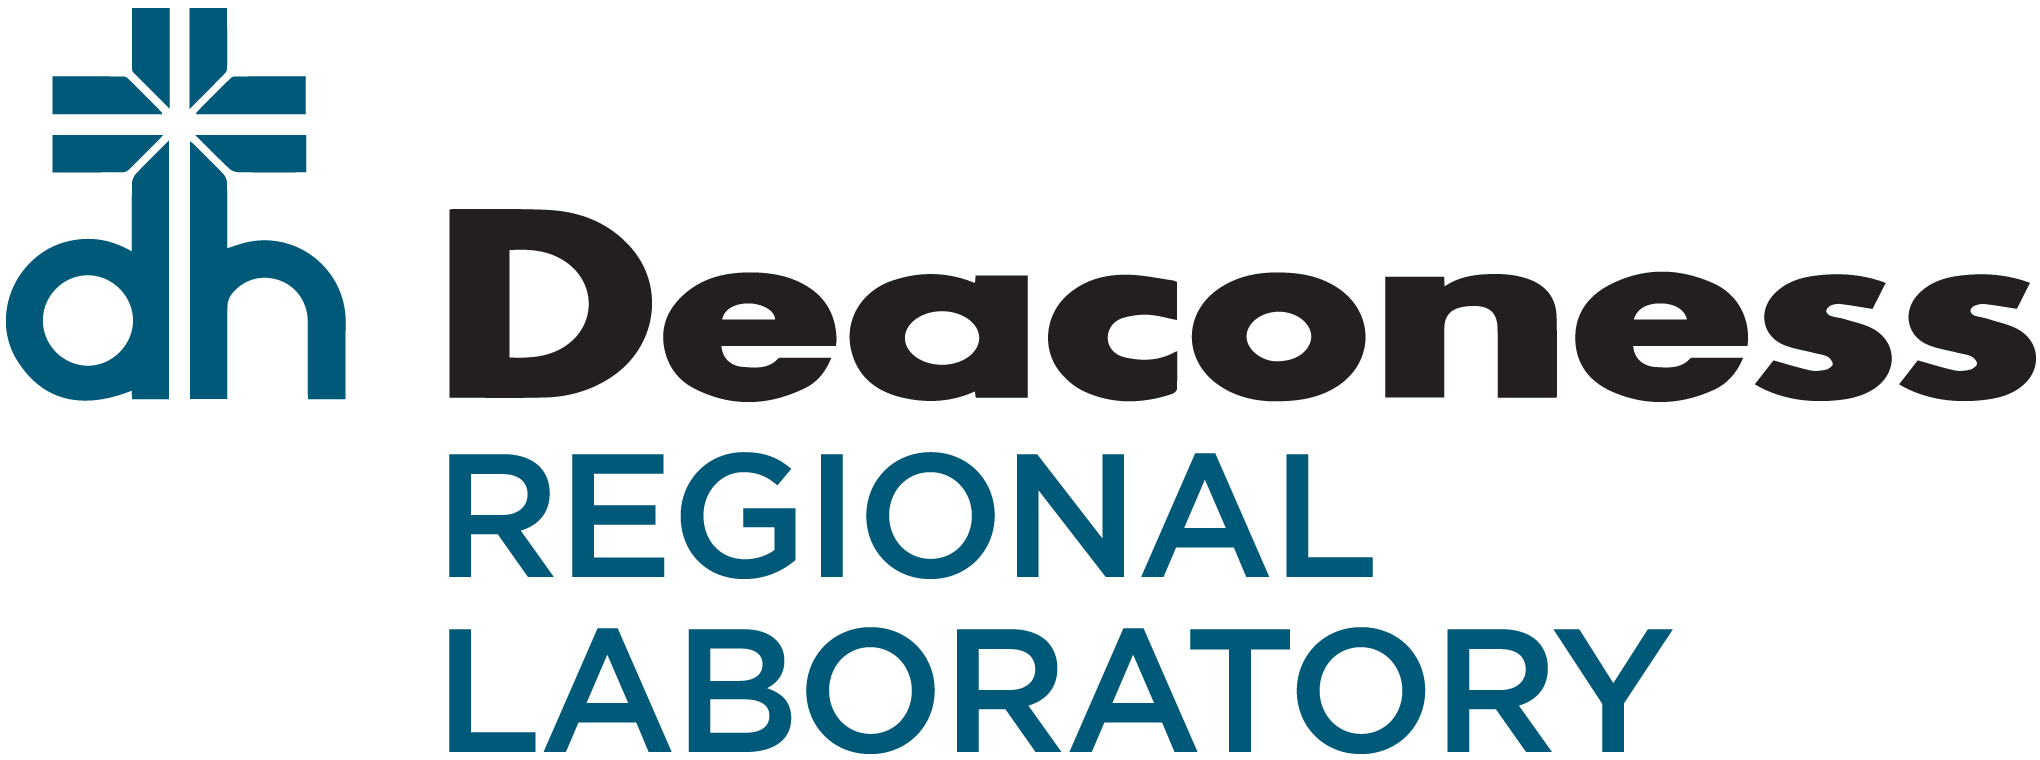 Deaconess Regional Laboratory